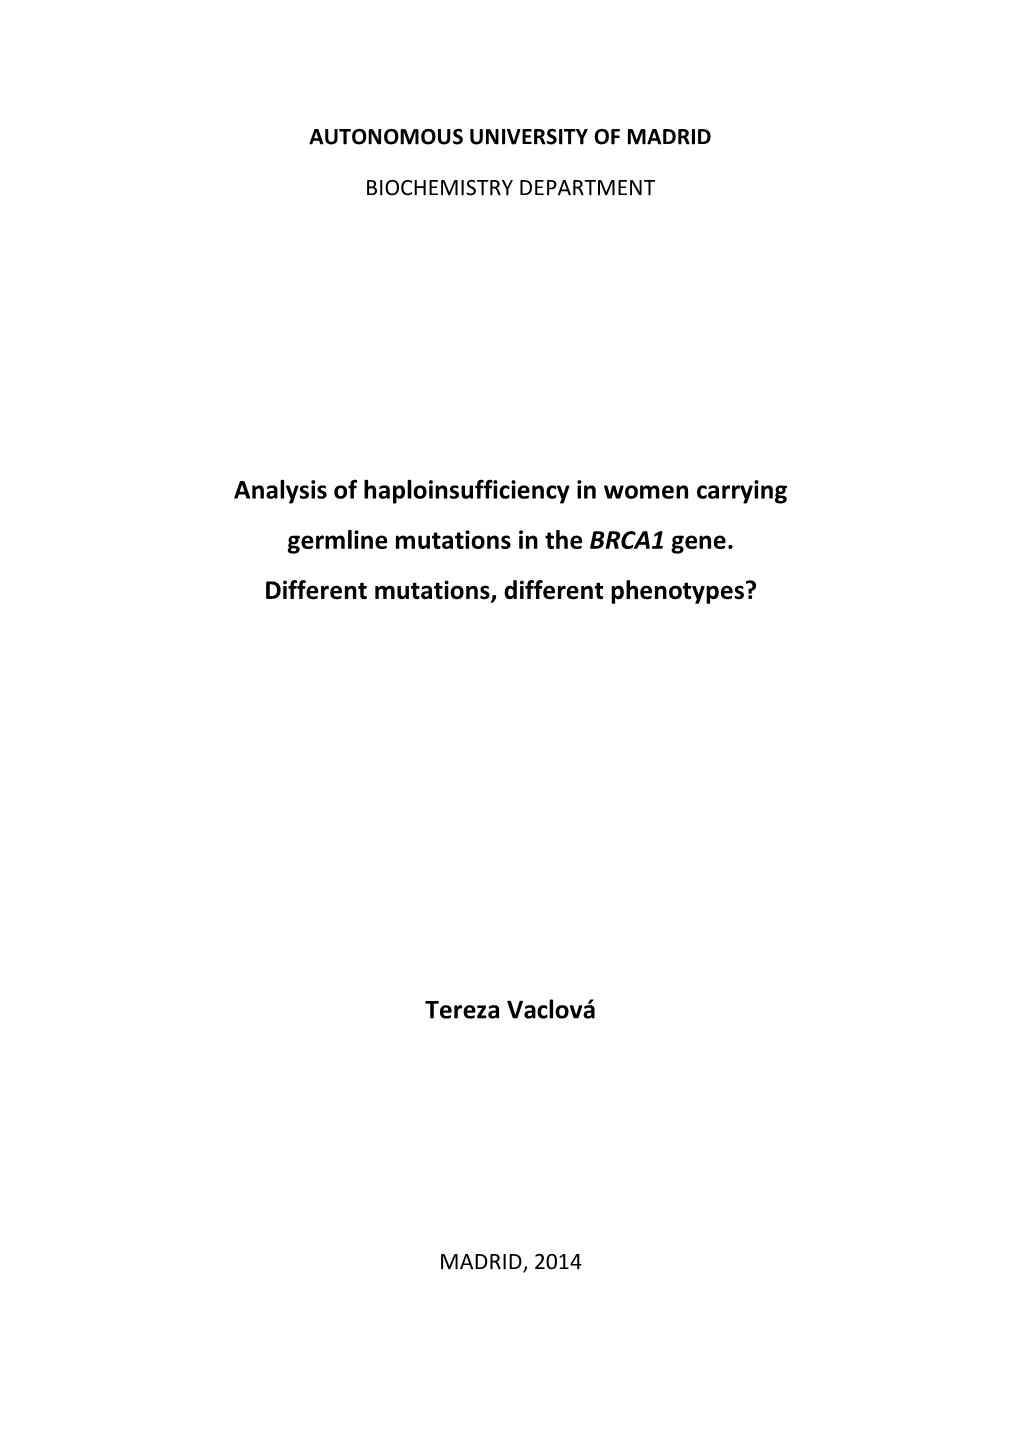 Analysis of Haploinsufficiency in Women Carrying Germline Mutations in the BRCA1 Gene